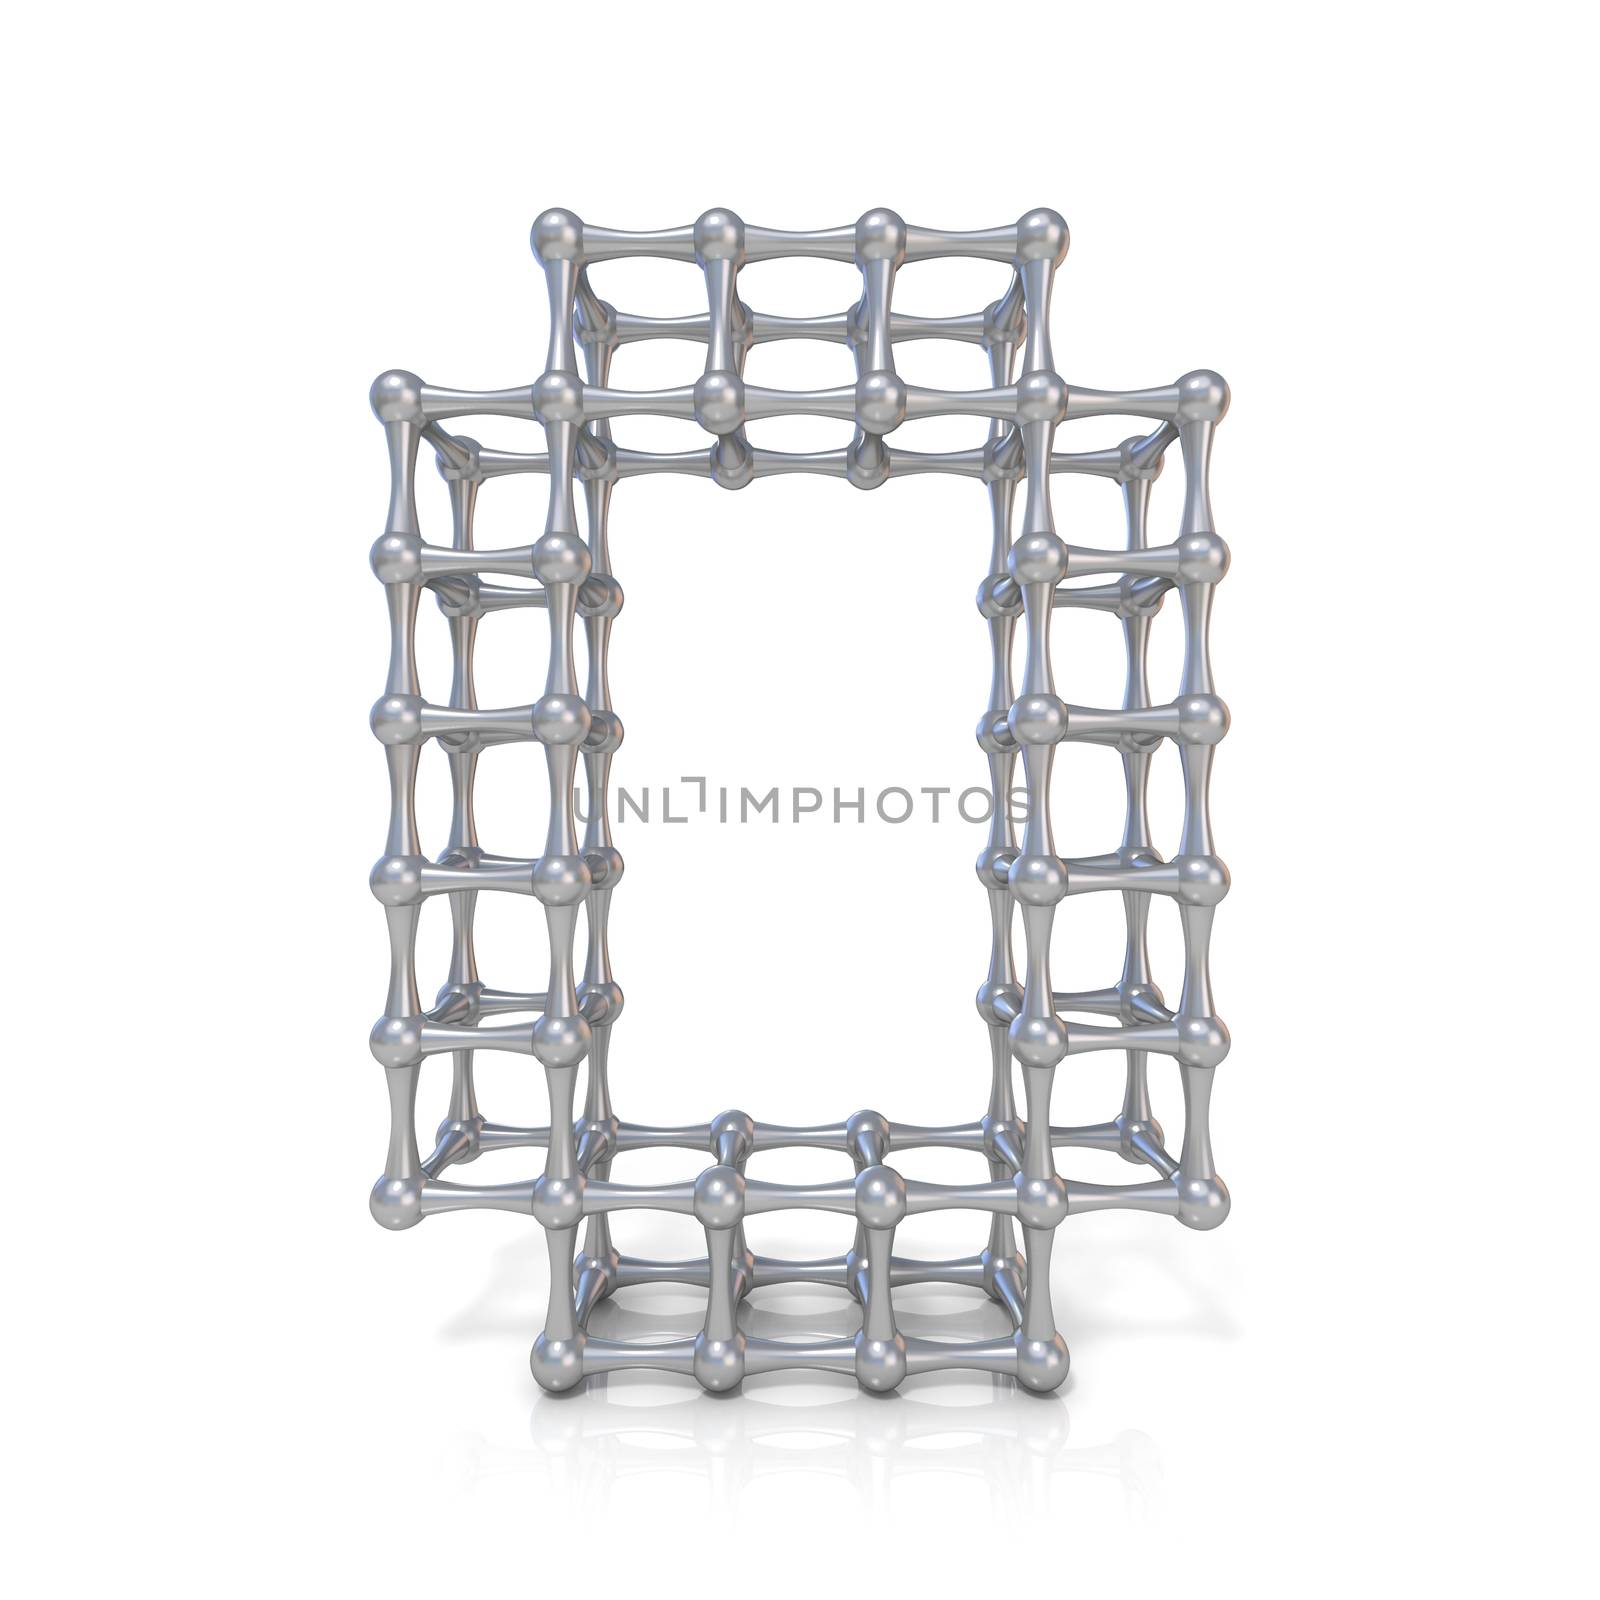 Metal lattice font letter O 3D render illustration isolated on white background